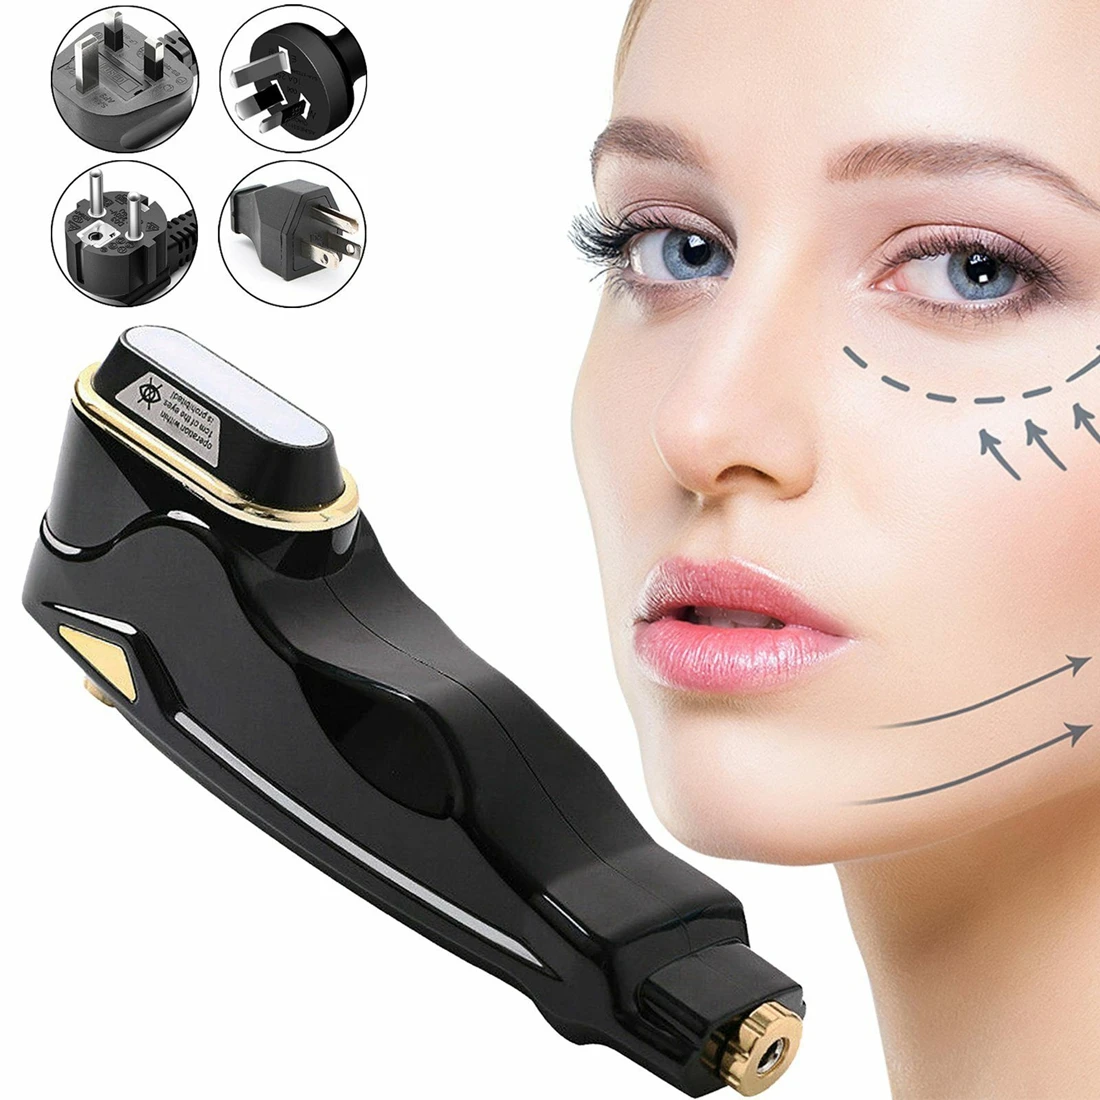 

Professional Mini HIFU Facial Rejuvenation Anti Aging/Wrinkle Beauty Machine Ultrasonic Skin Care SPA Salon Home Use CE